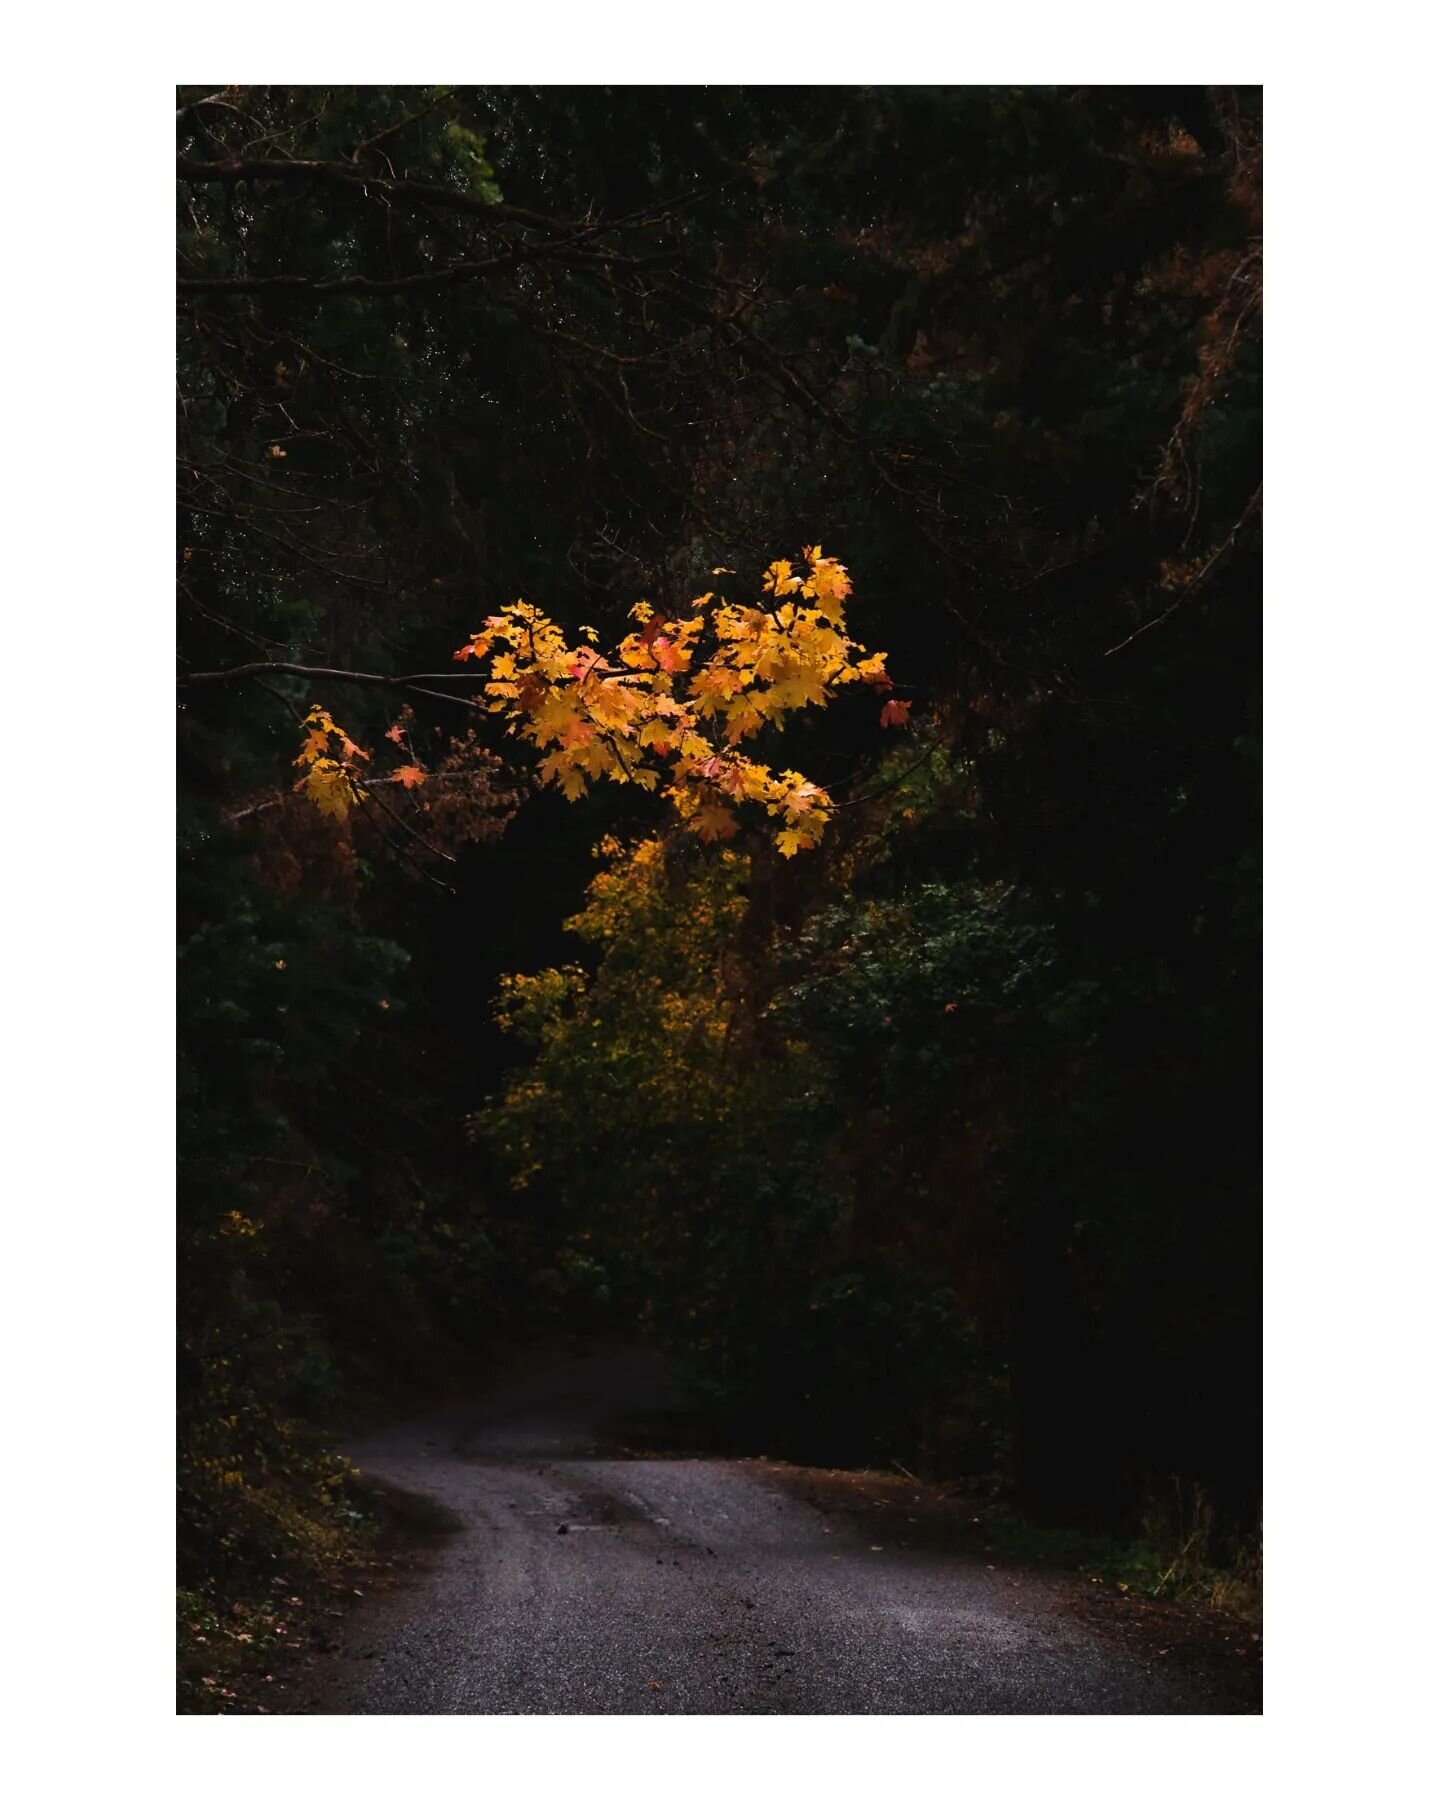 Nothing short of magic.

#fall #fallinutah #magic #landscape_captures #autumn #rainyday #mistymountains #utah #utahisrad